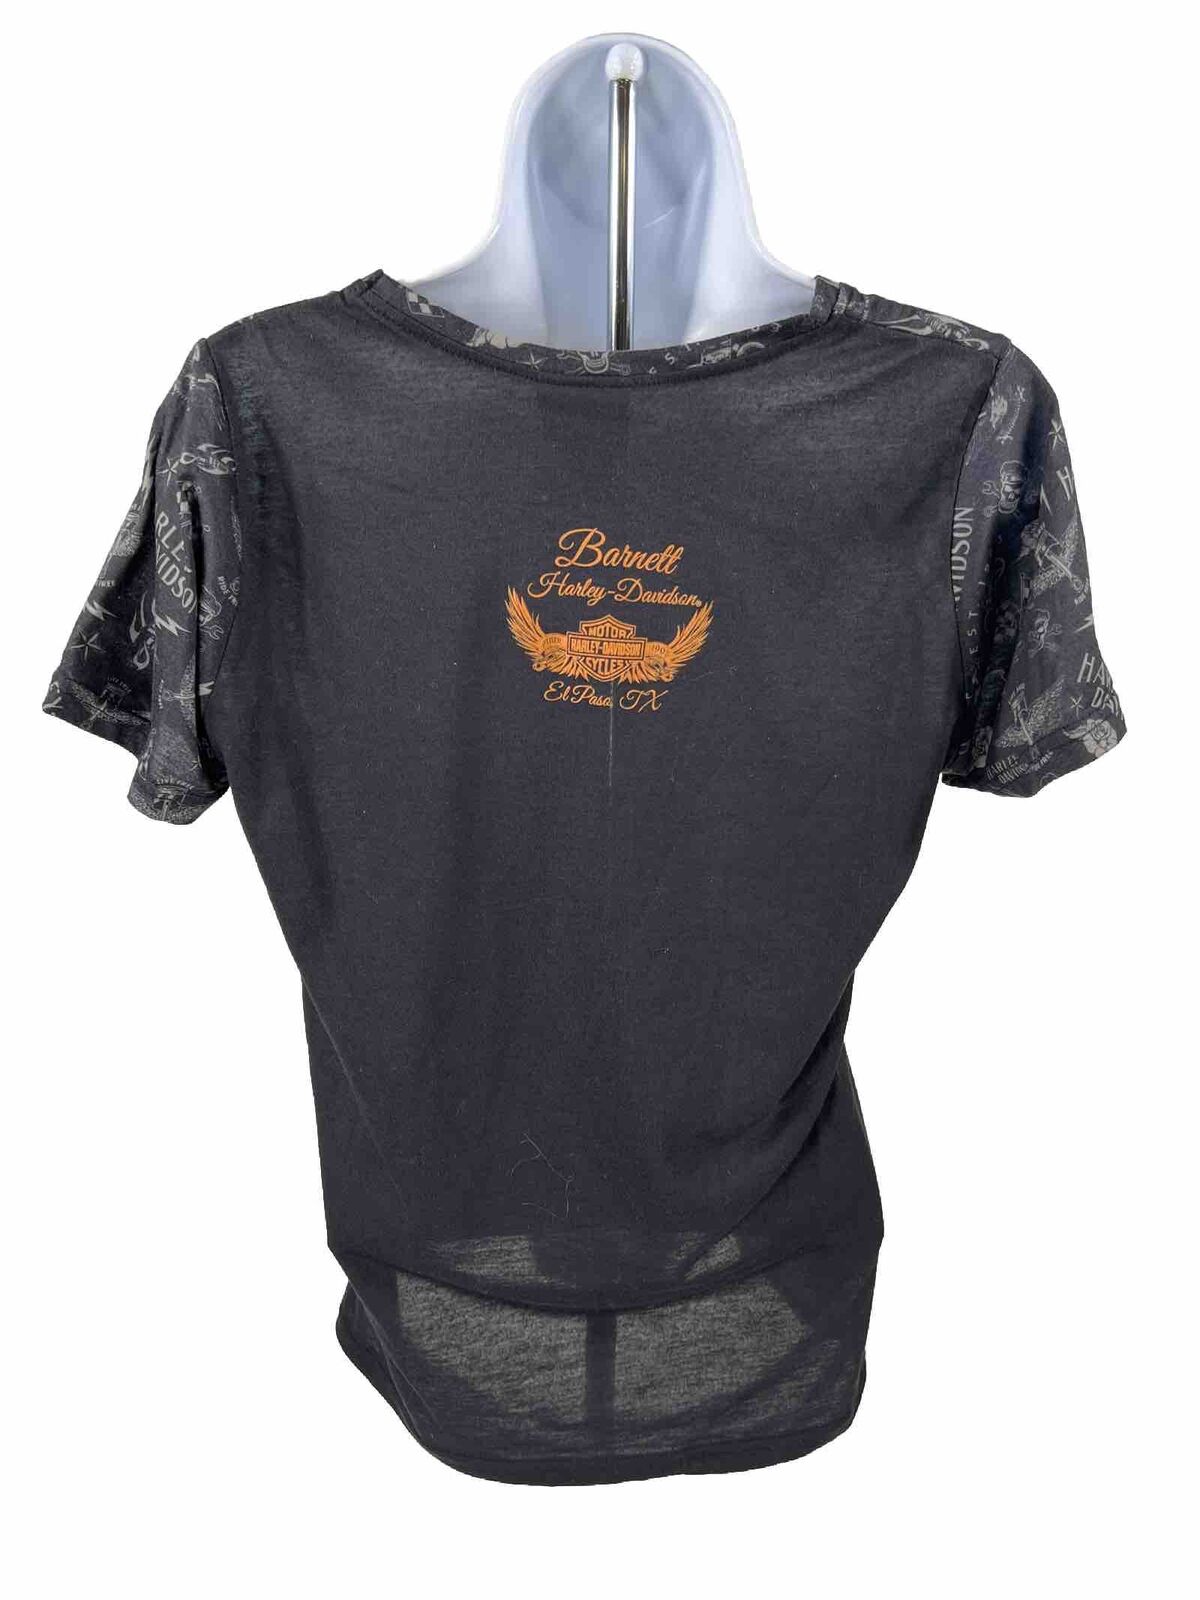 Harley-Davidson Women's Black Short Sleeve Graphic T-Shirt - XL